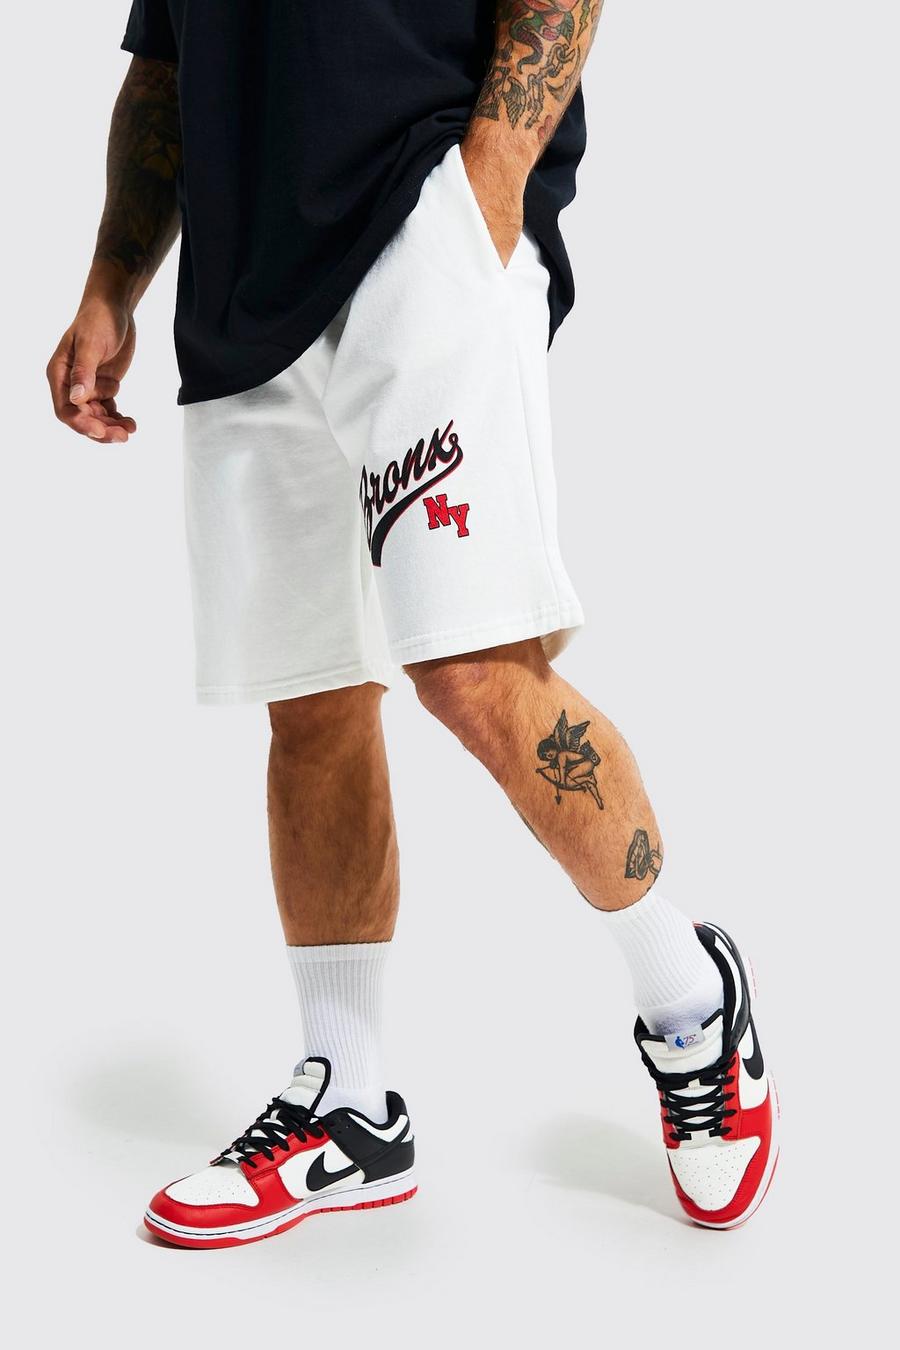 Pantalón corto holgado de tela jersey con estampado de Bronks Collegiate, White bianco